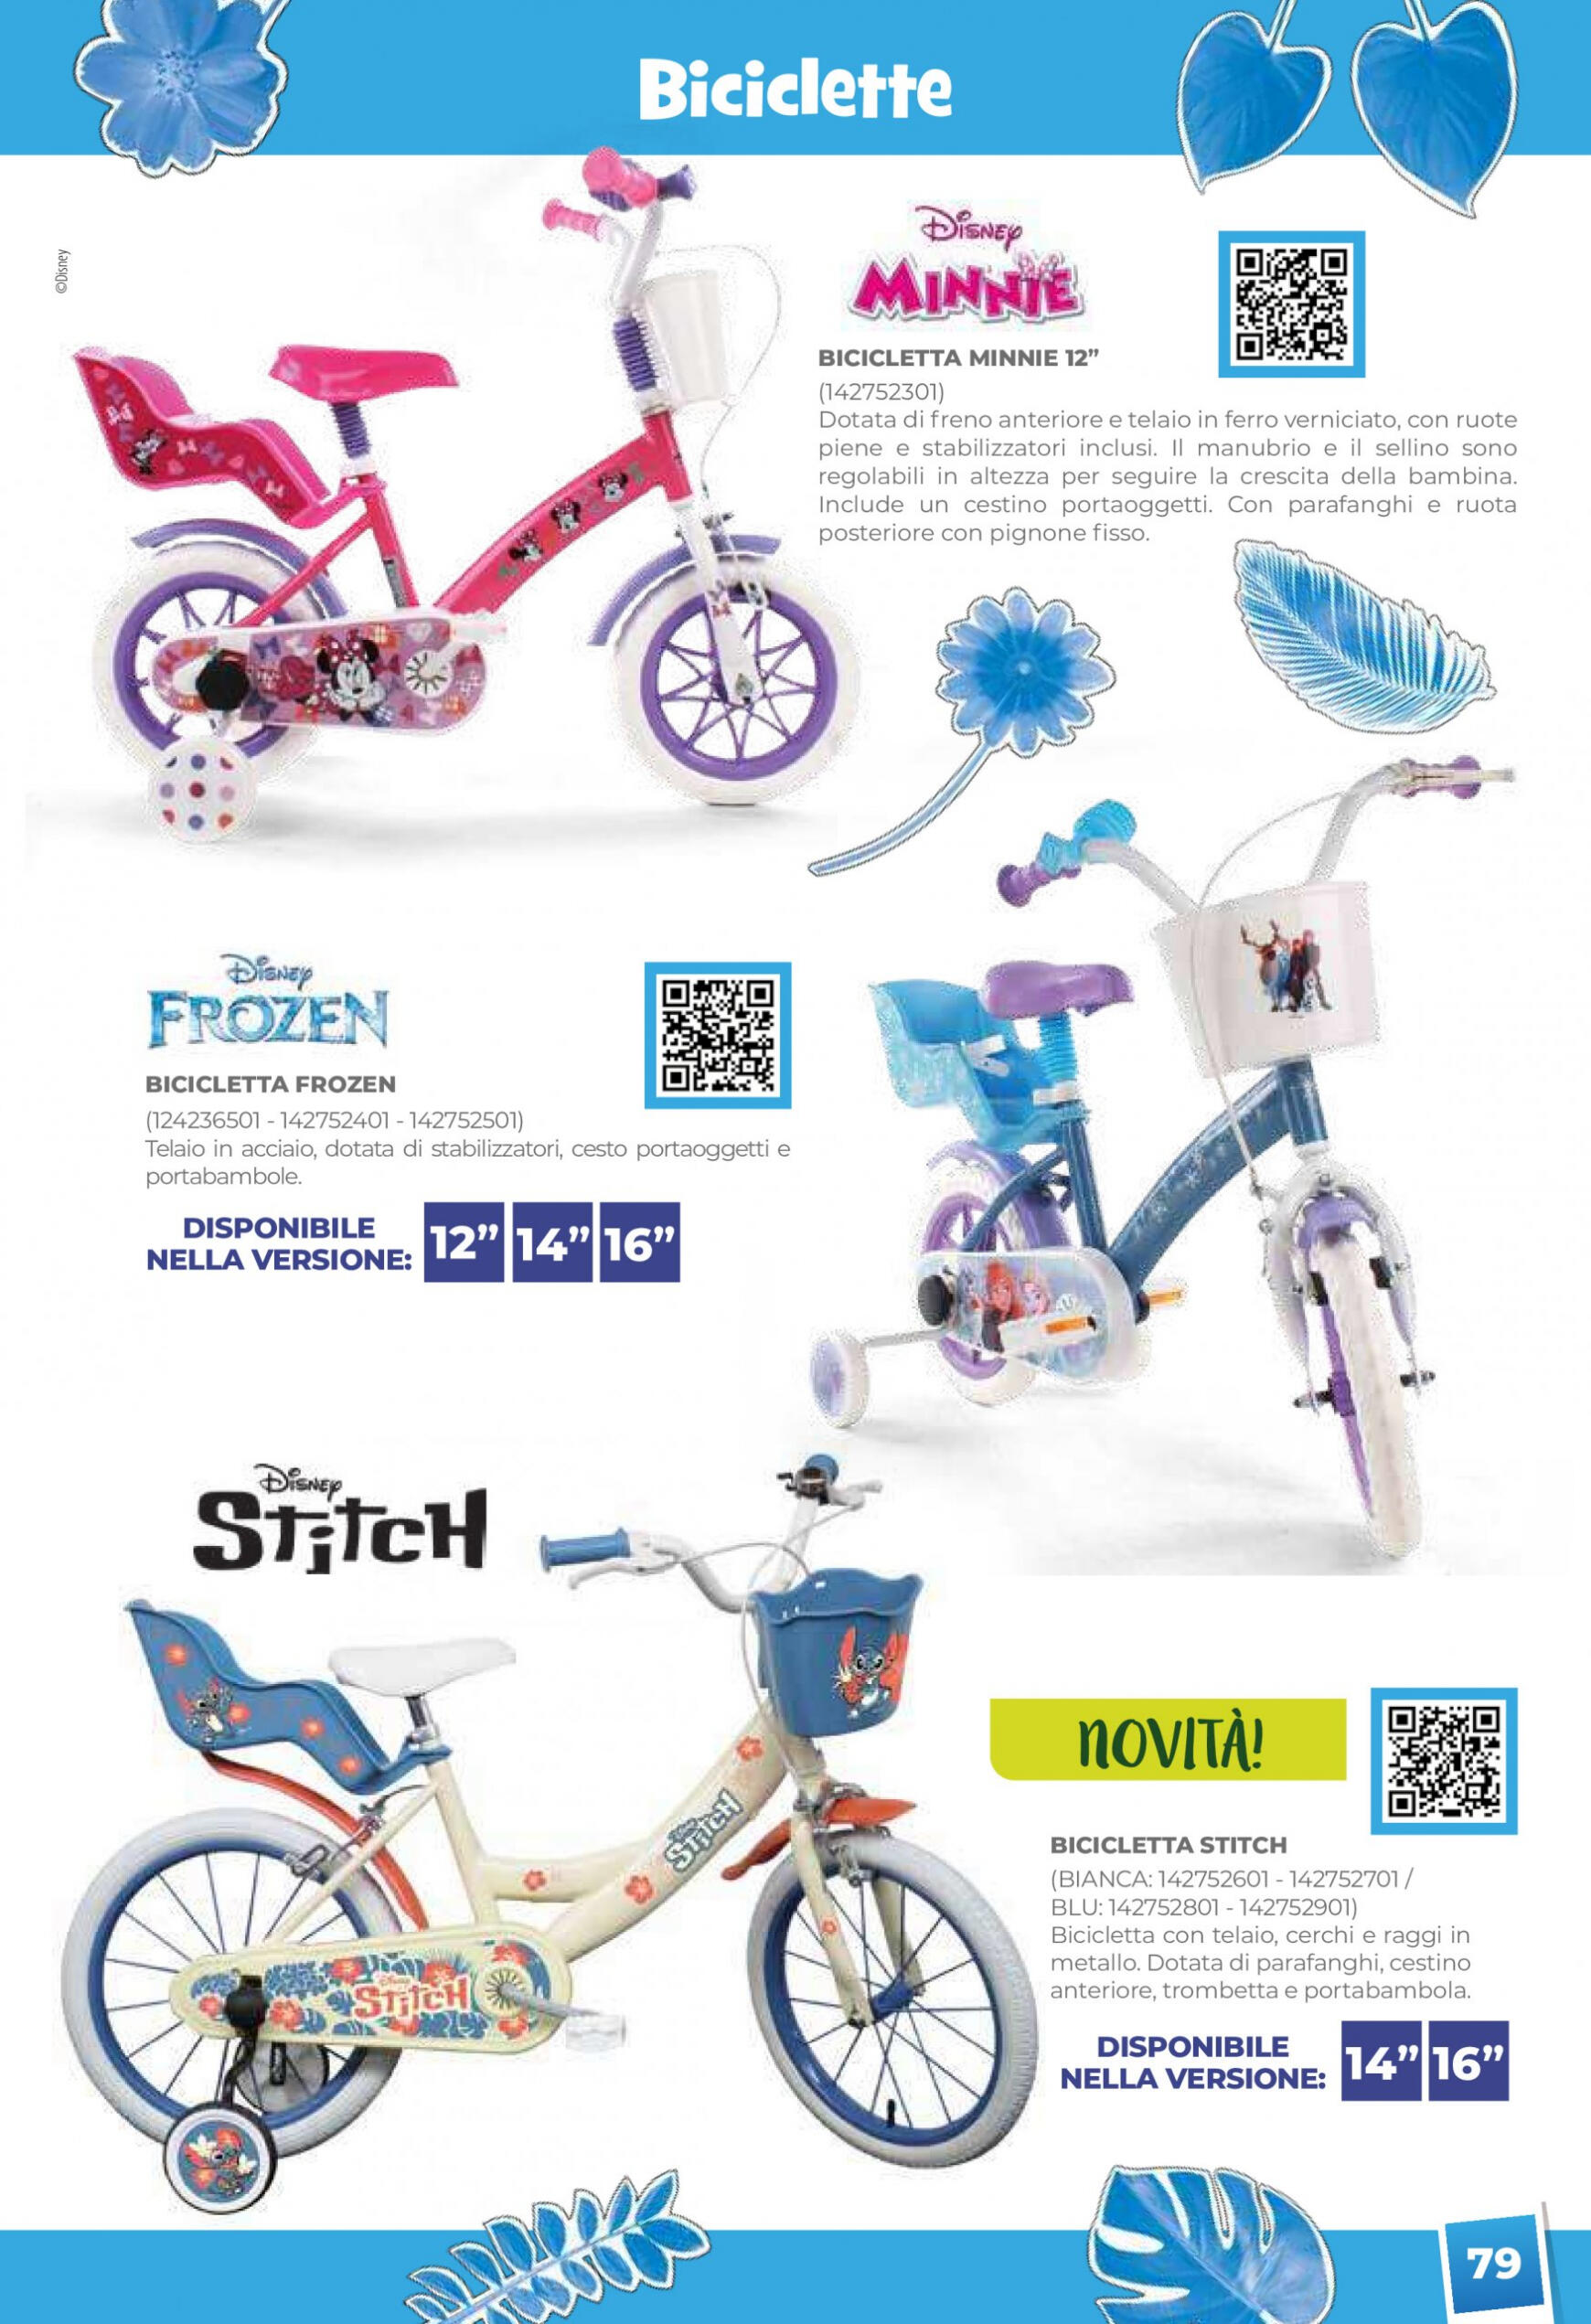 toys-center - Nuovo volantino Toys Center 01.05. - 31.12. - page: 81